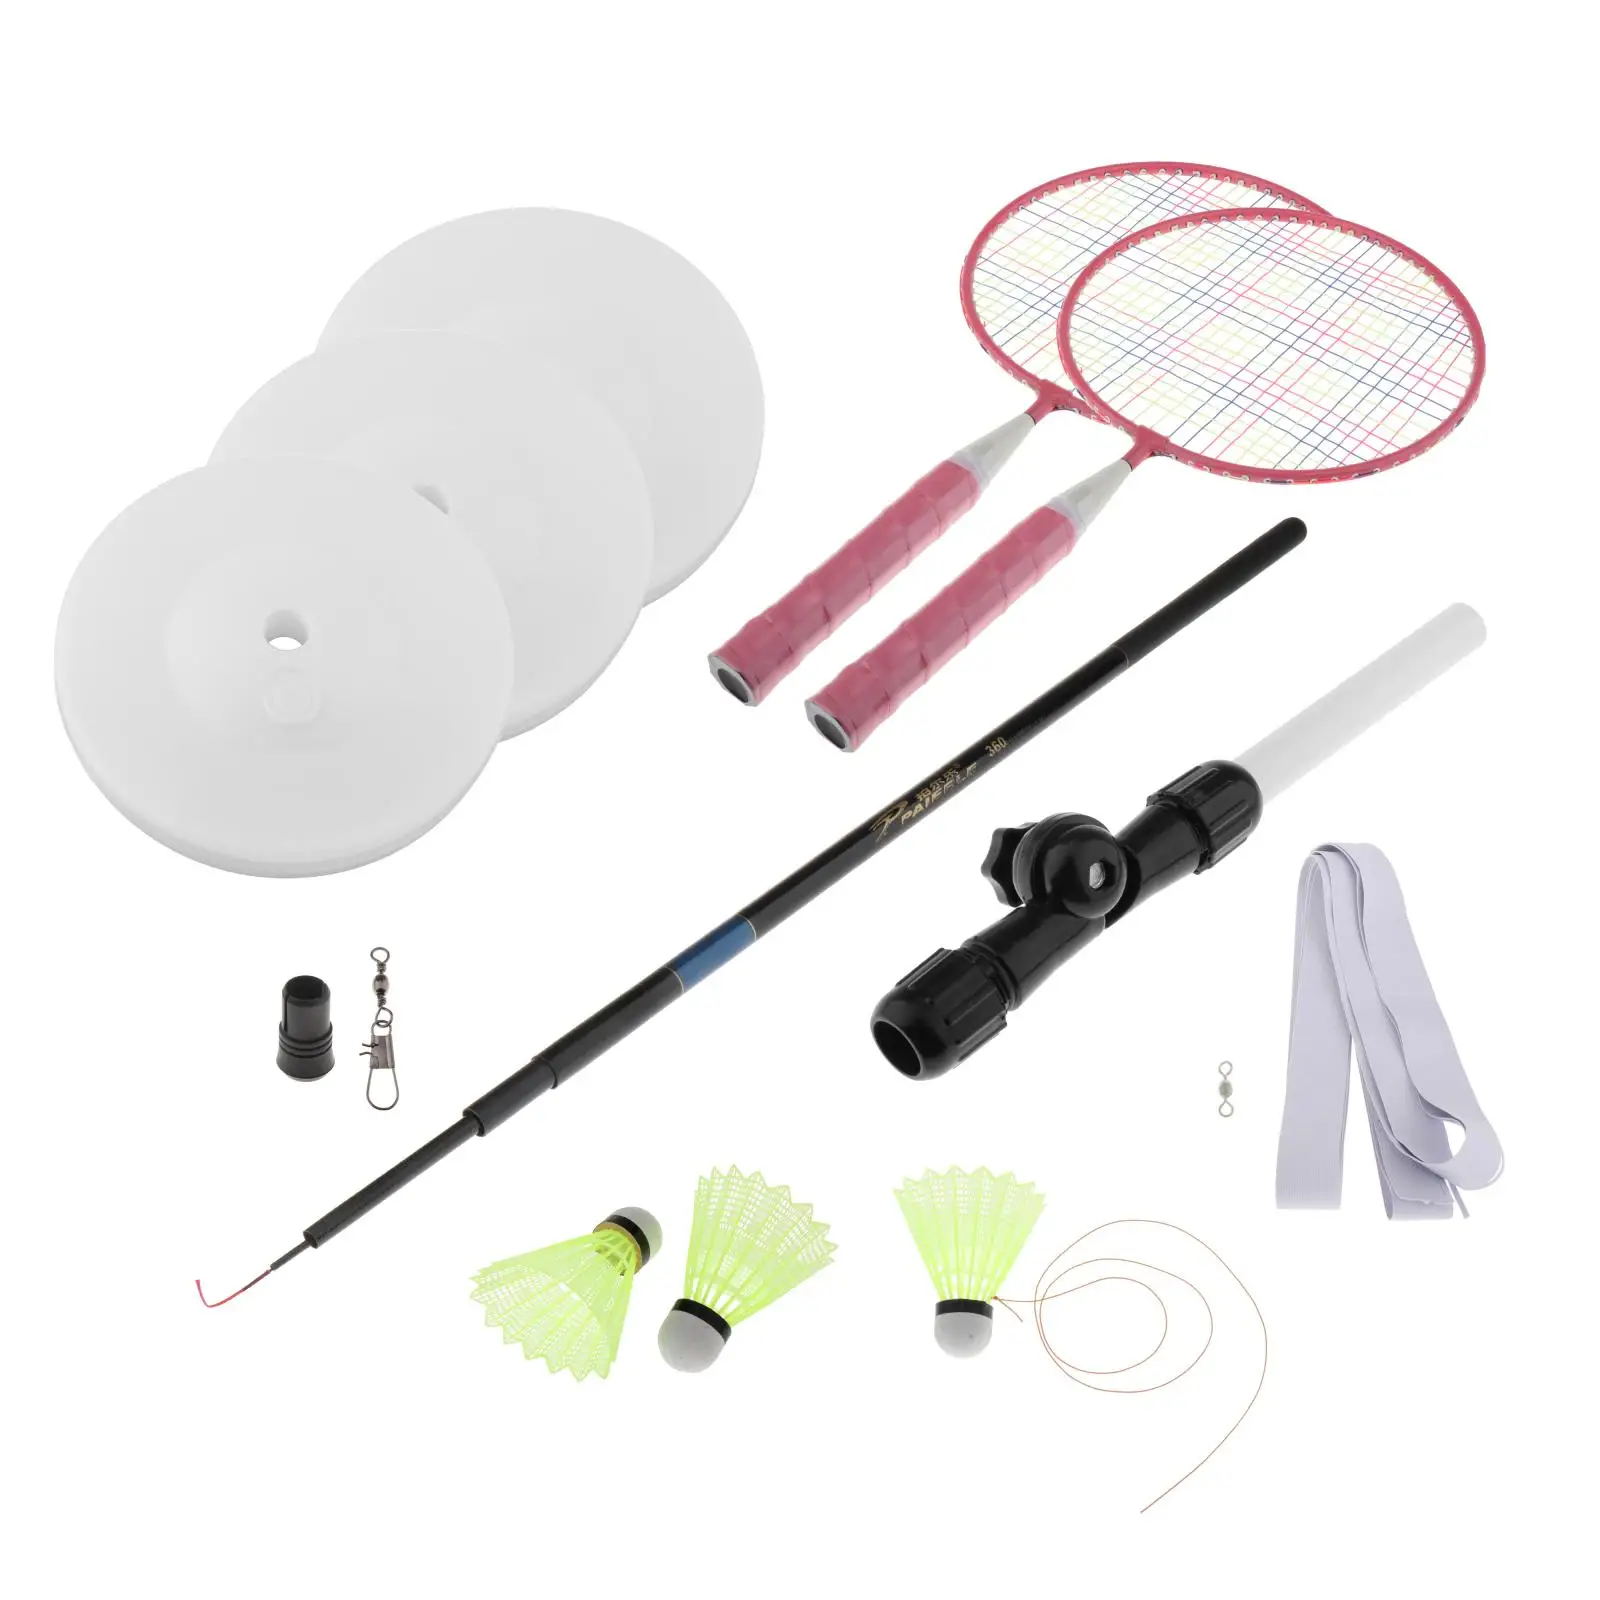 Outgeek Badminton Trainer Set Portable Badminton Practice Tool Badminton Supplies 